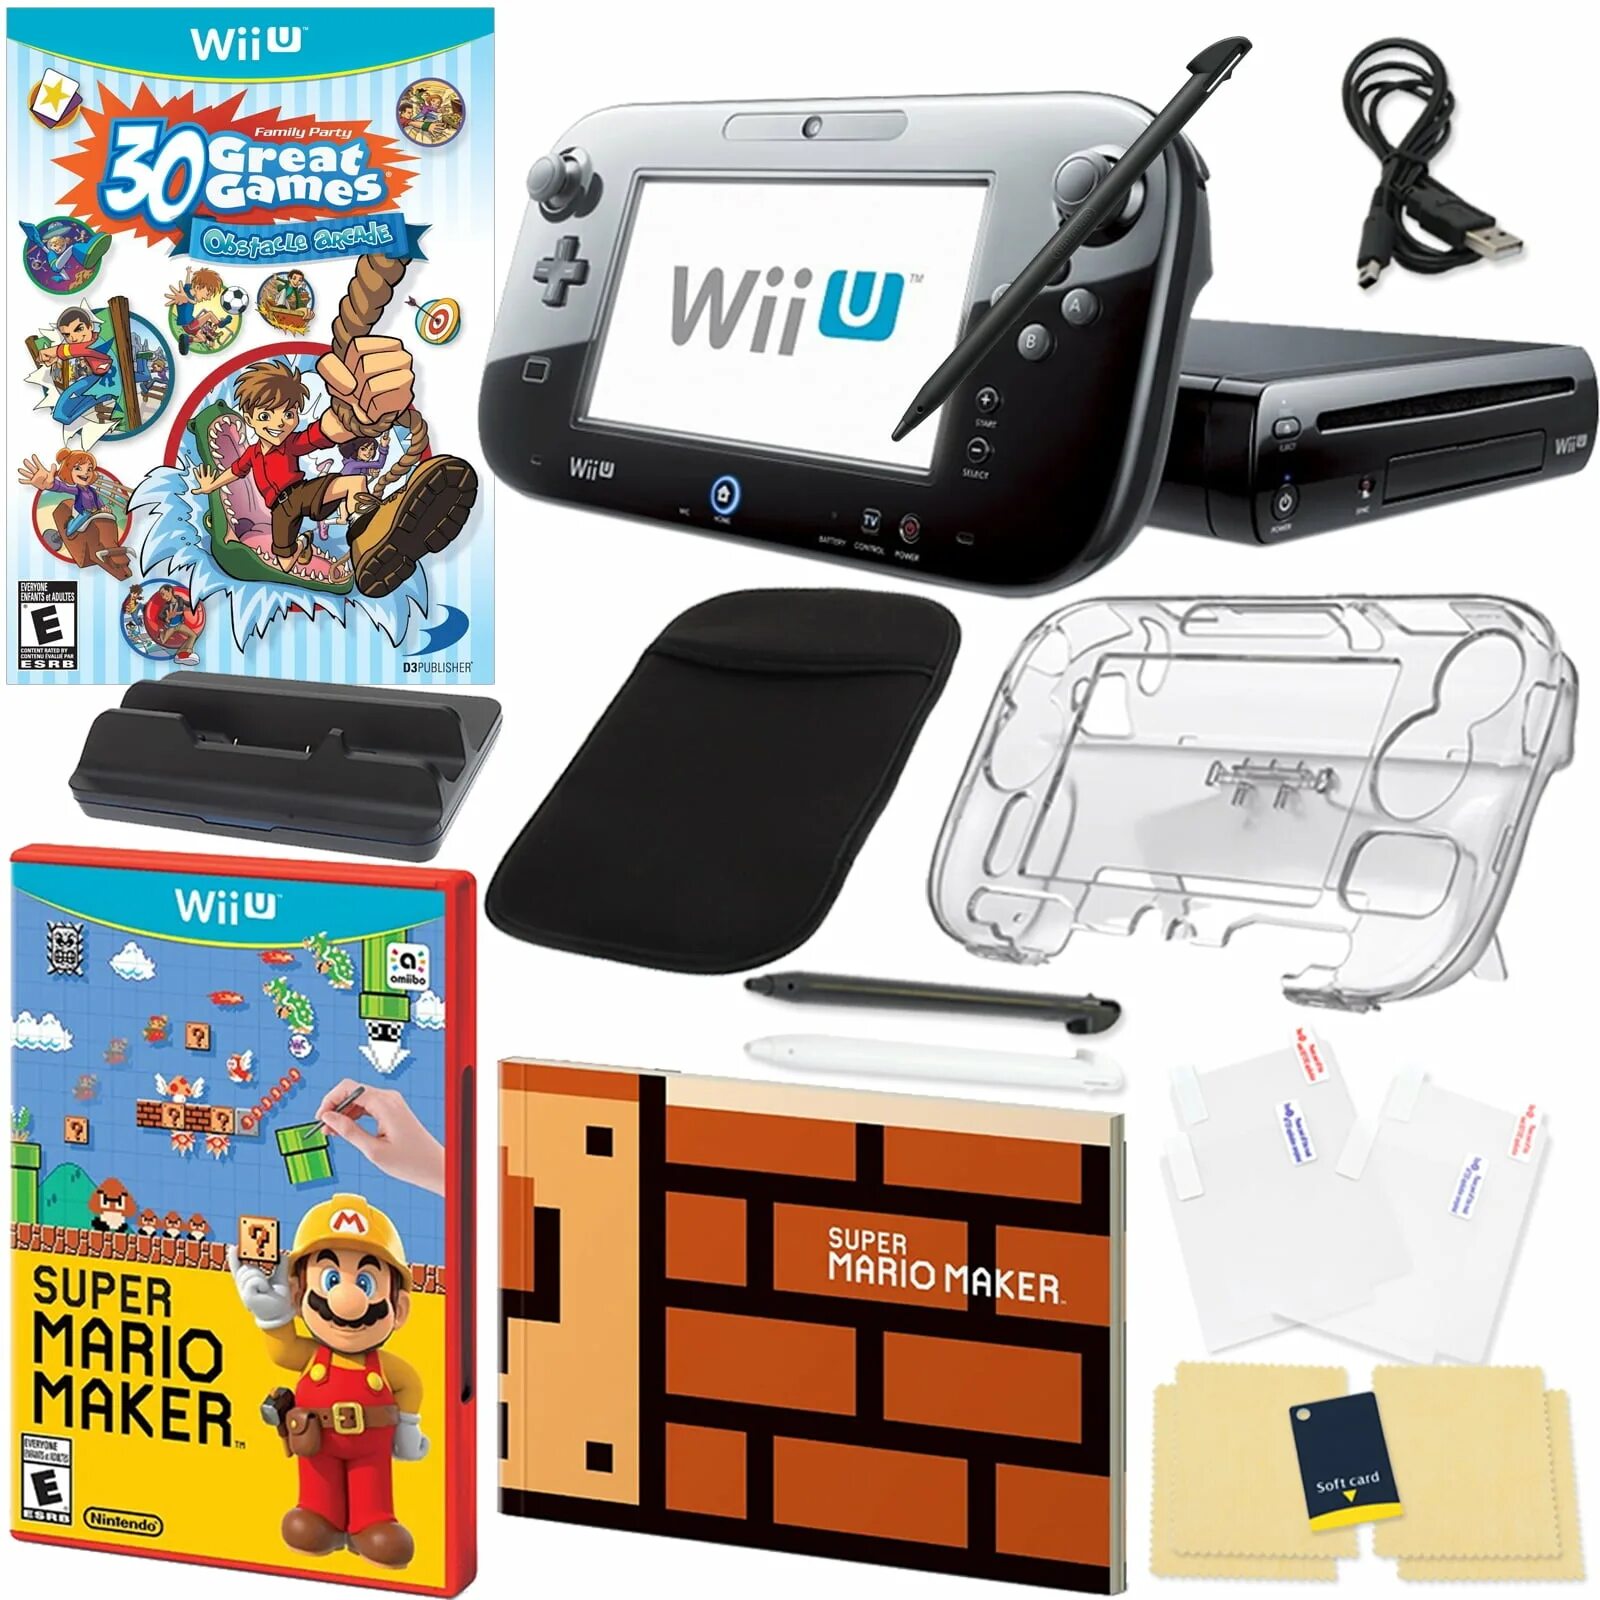 Mario Wii u. Super Mario maker Wii u. Mario Kart 8 Wii u Deluxe Set. Wii u Bundle. Mario maker wii